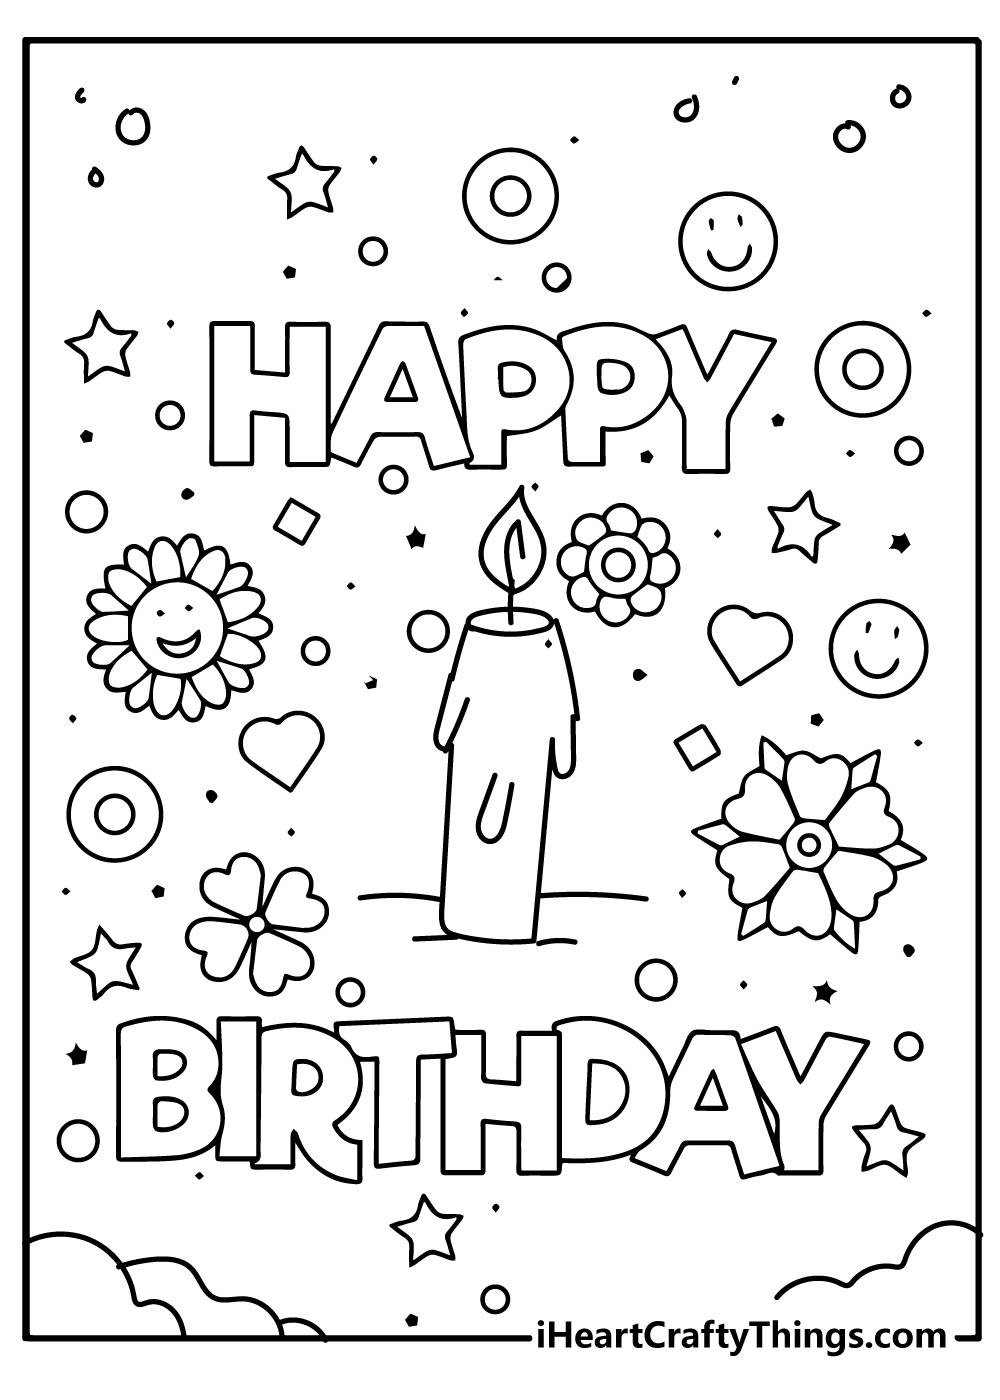 day-5-printable-happy-birthday-colouring-card-tarjeta-de